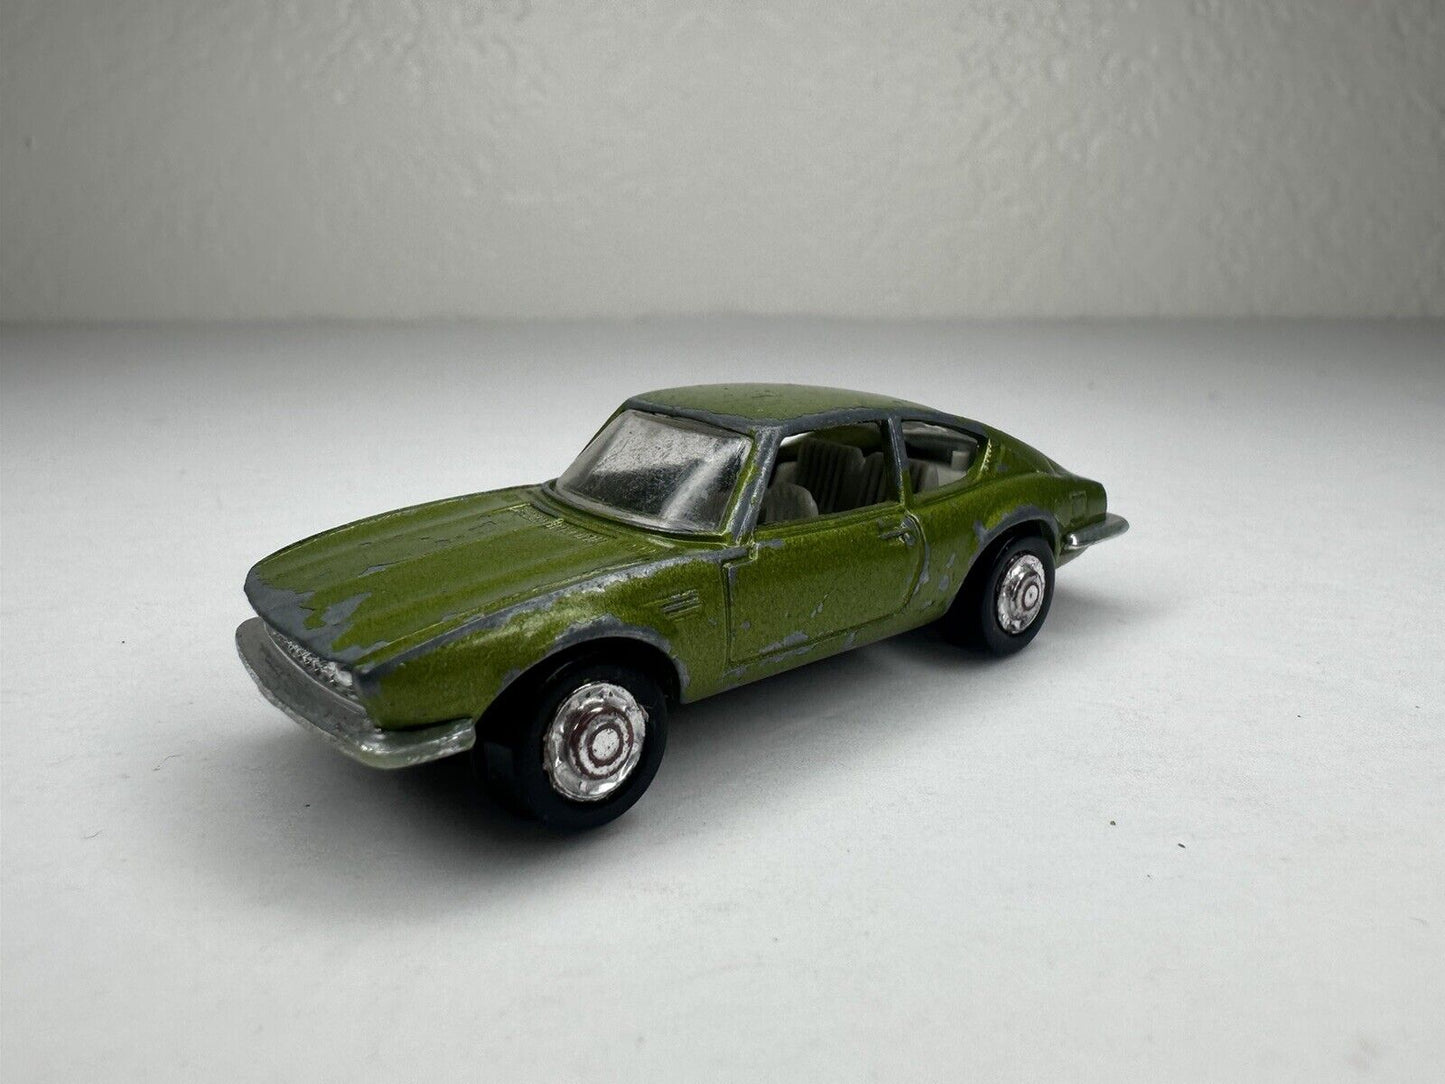 Vintage Playart Green Fiat Dino Car - Classic Collectible Die-Cast Model - TreasuTiques